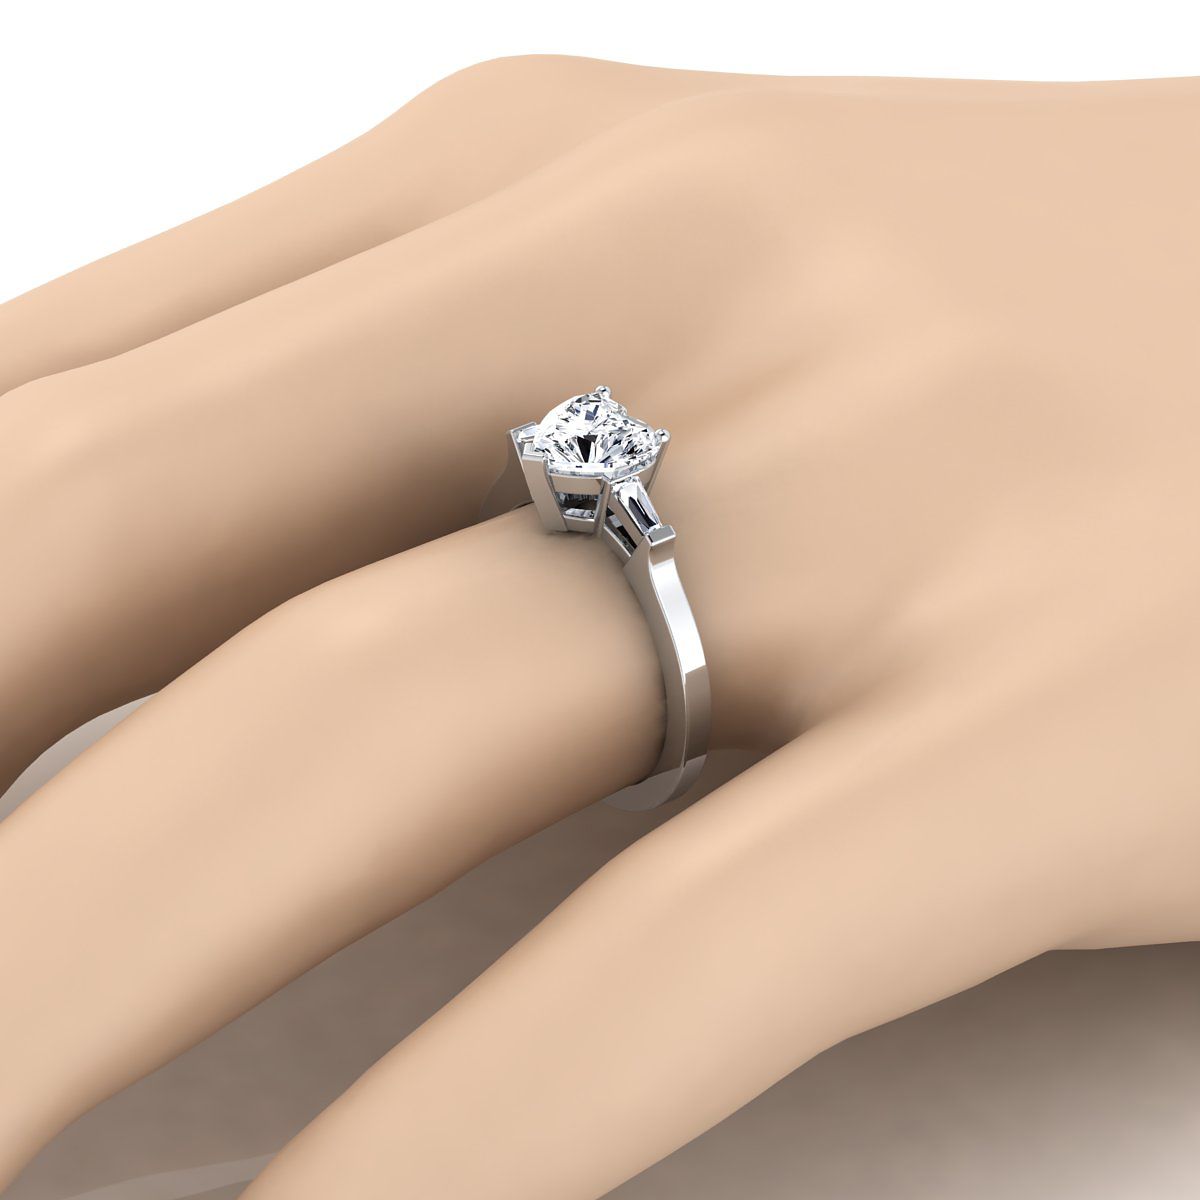 Platinum Heart Shape Center Diamond Tapered Baguette Accent Engagement Ring -1/4ctw